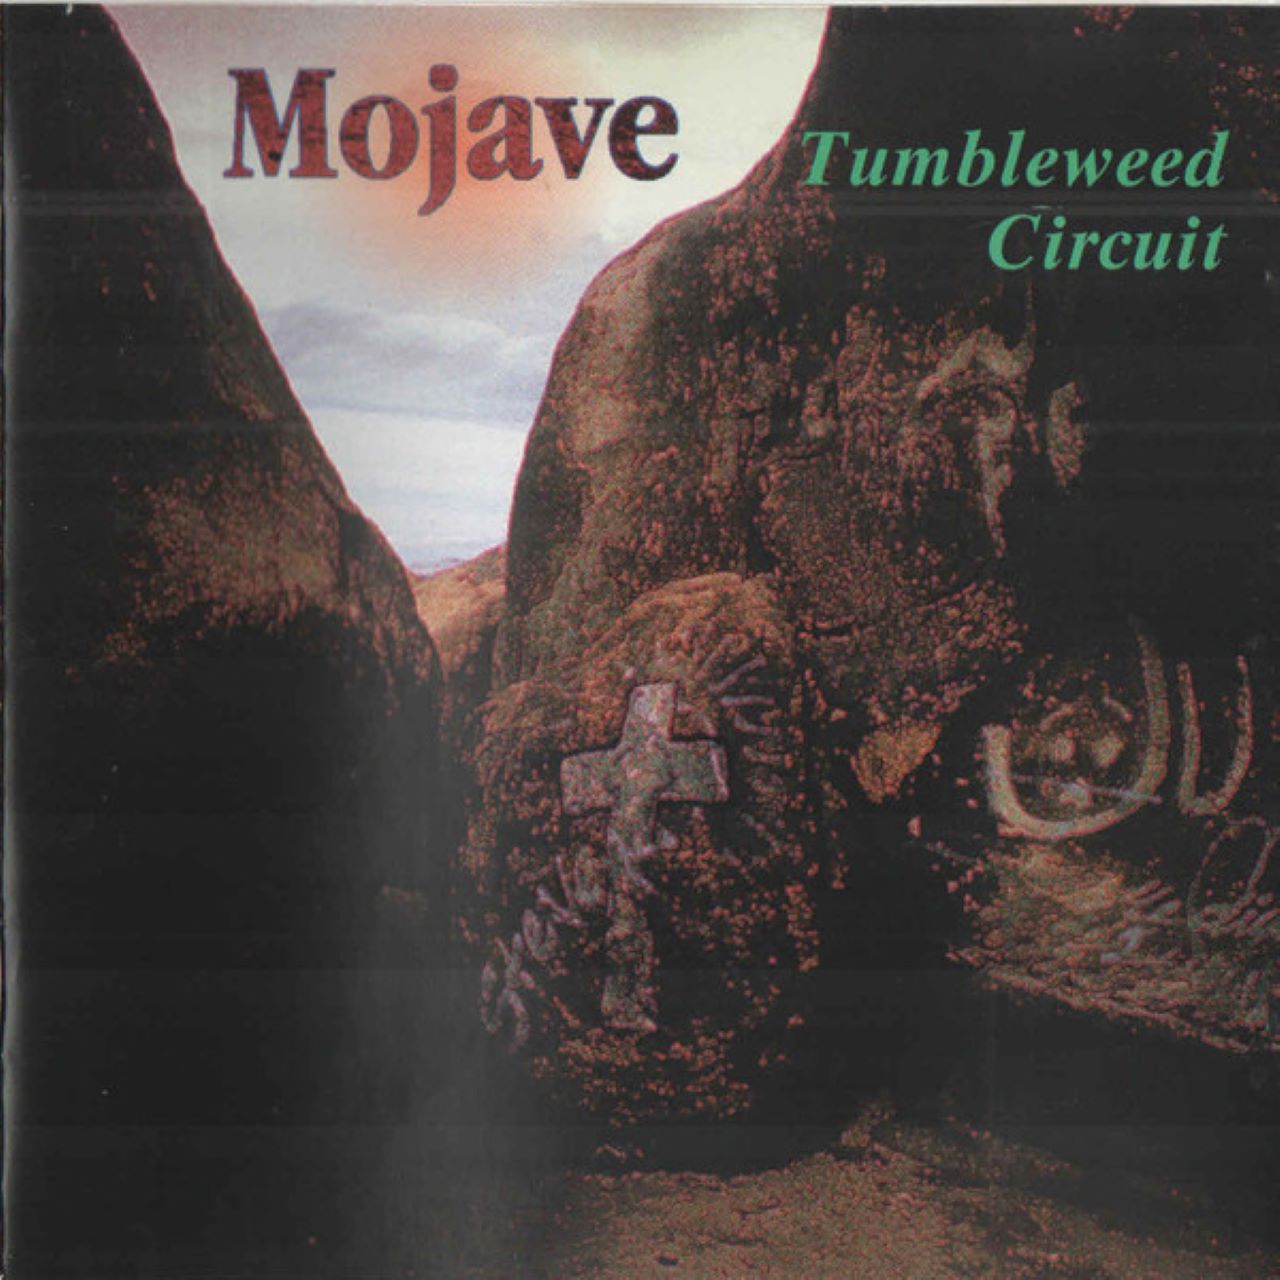 Mojave - Tumbleweed Circuit cover album